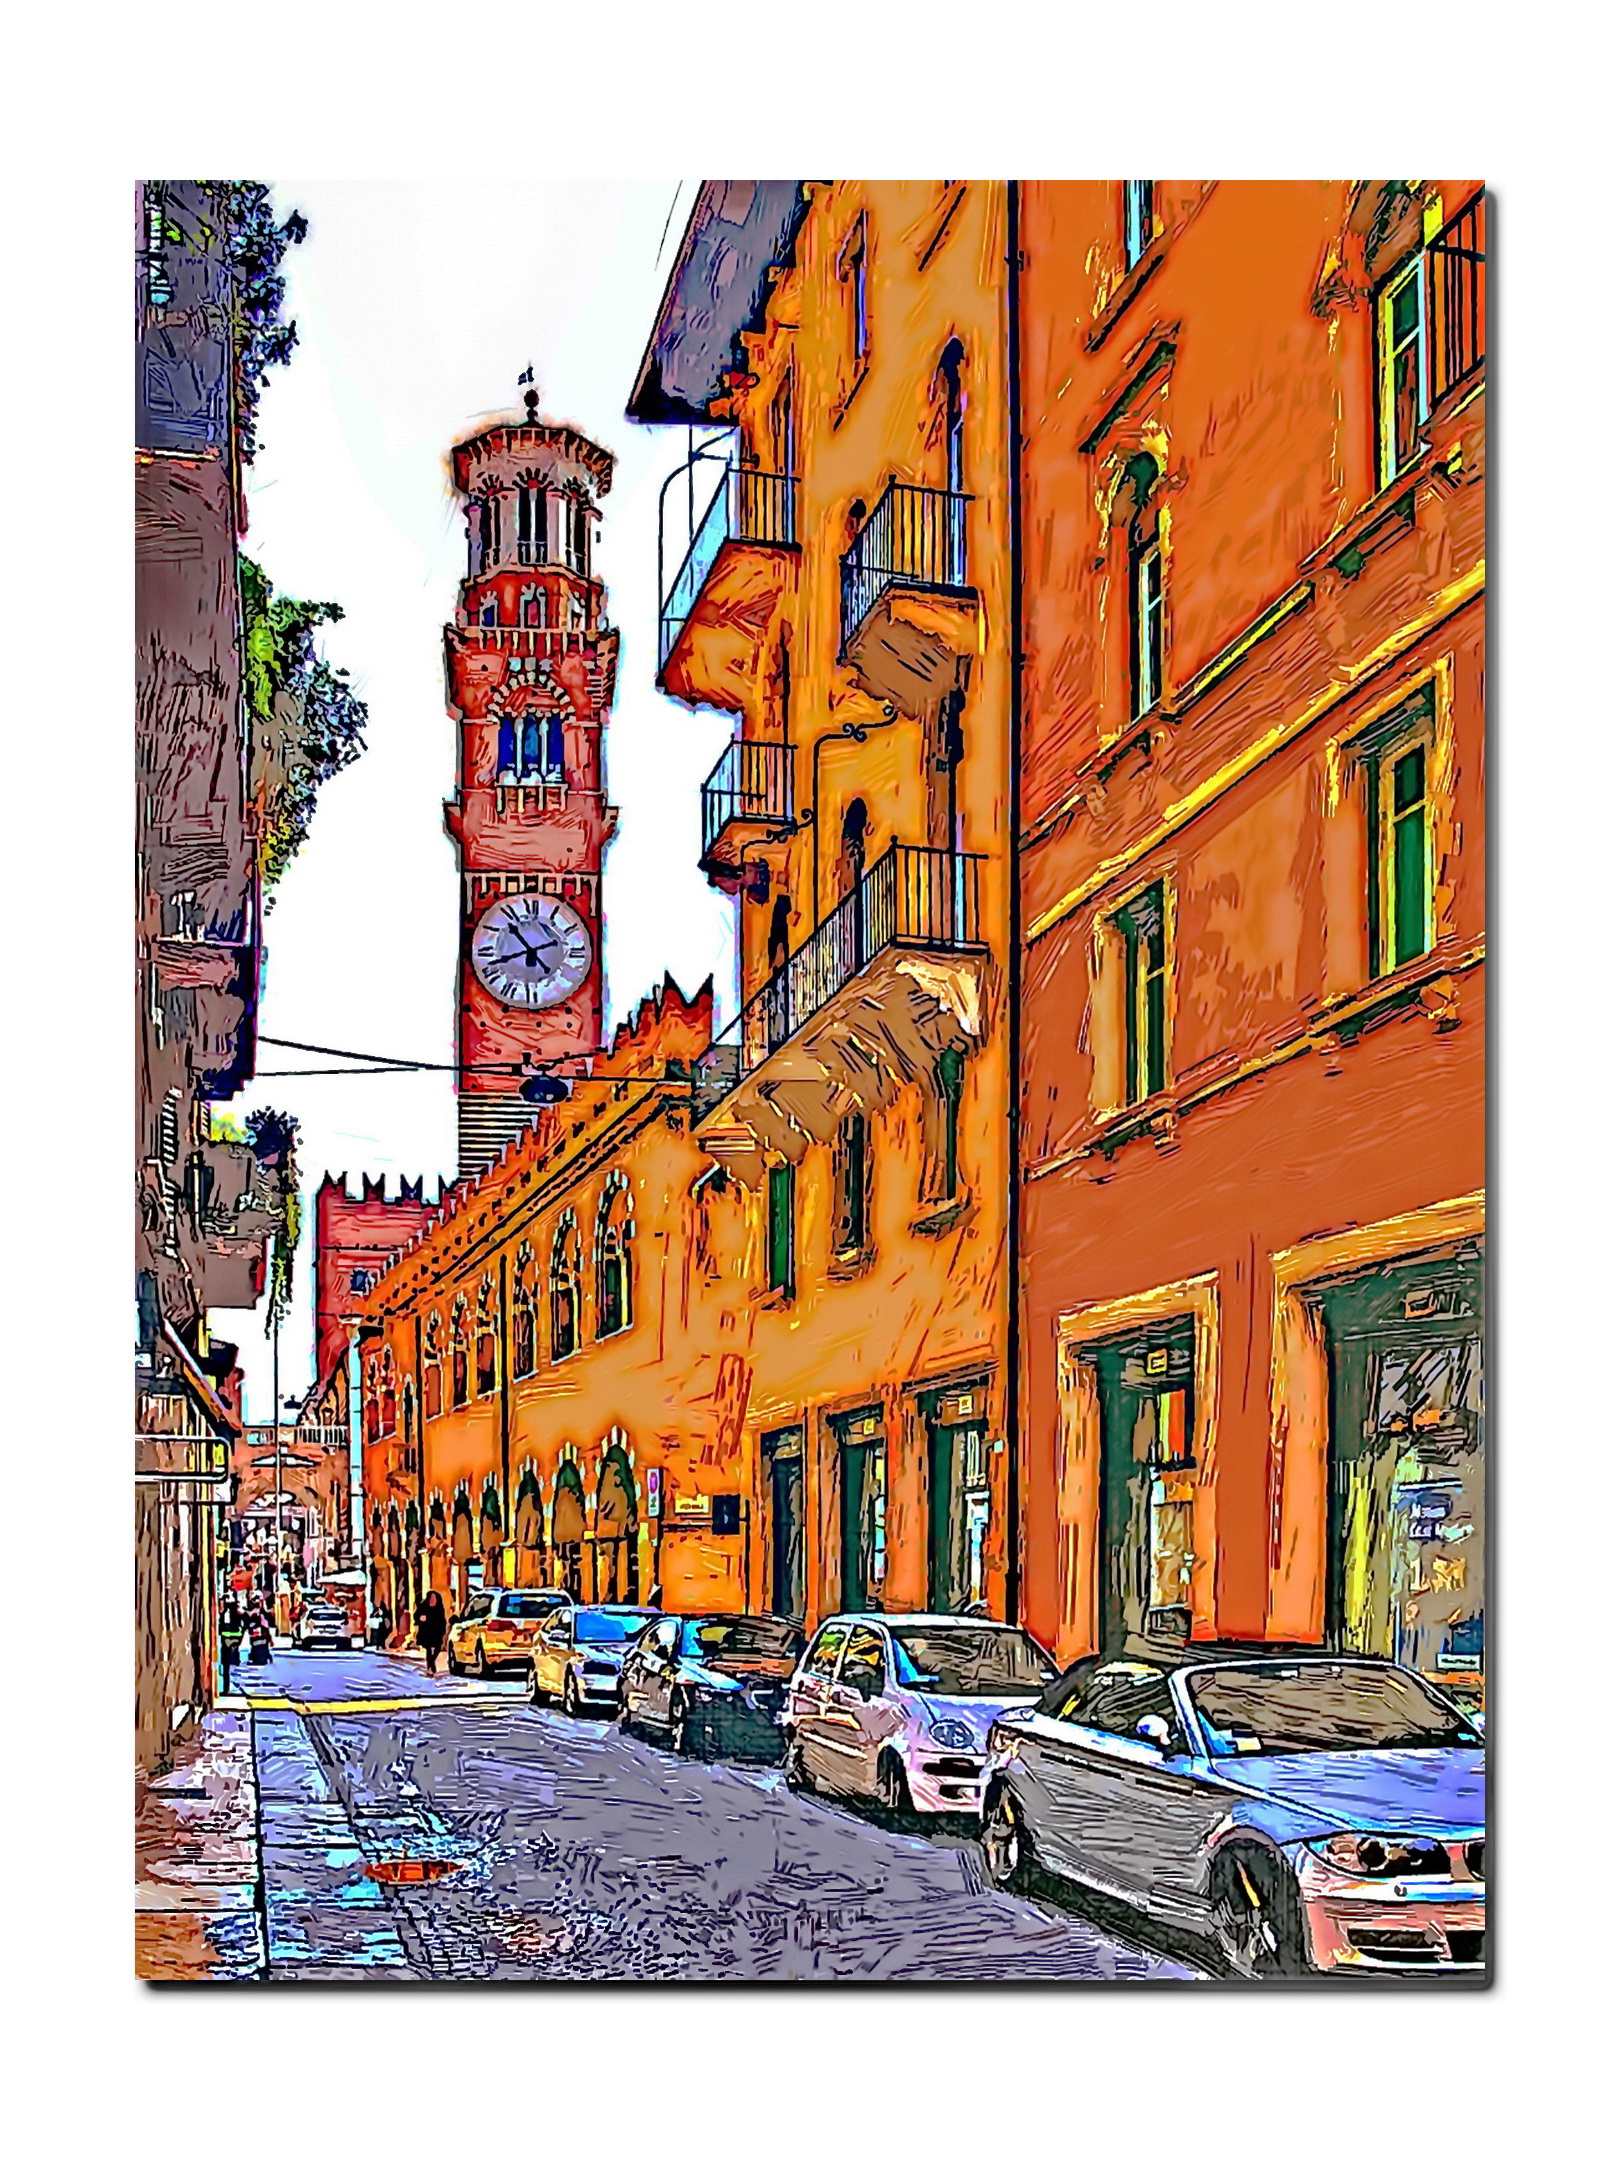 Verona - Via Pellicciai e torre dei Lamberti...